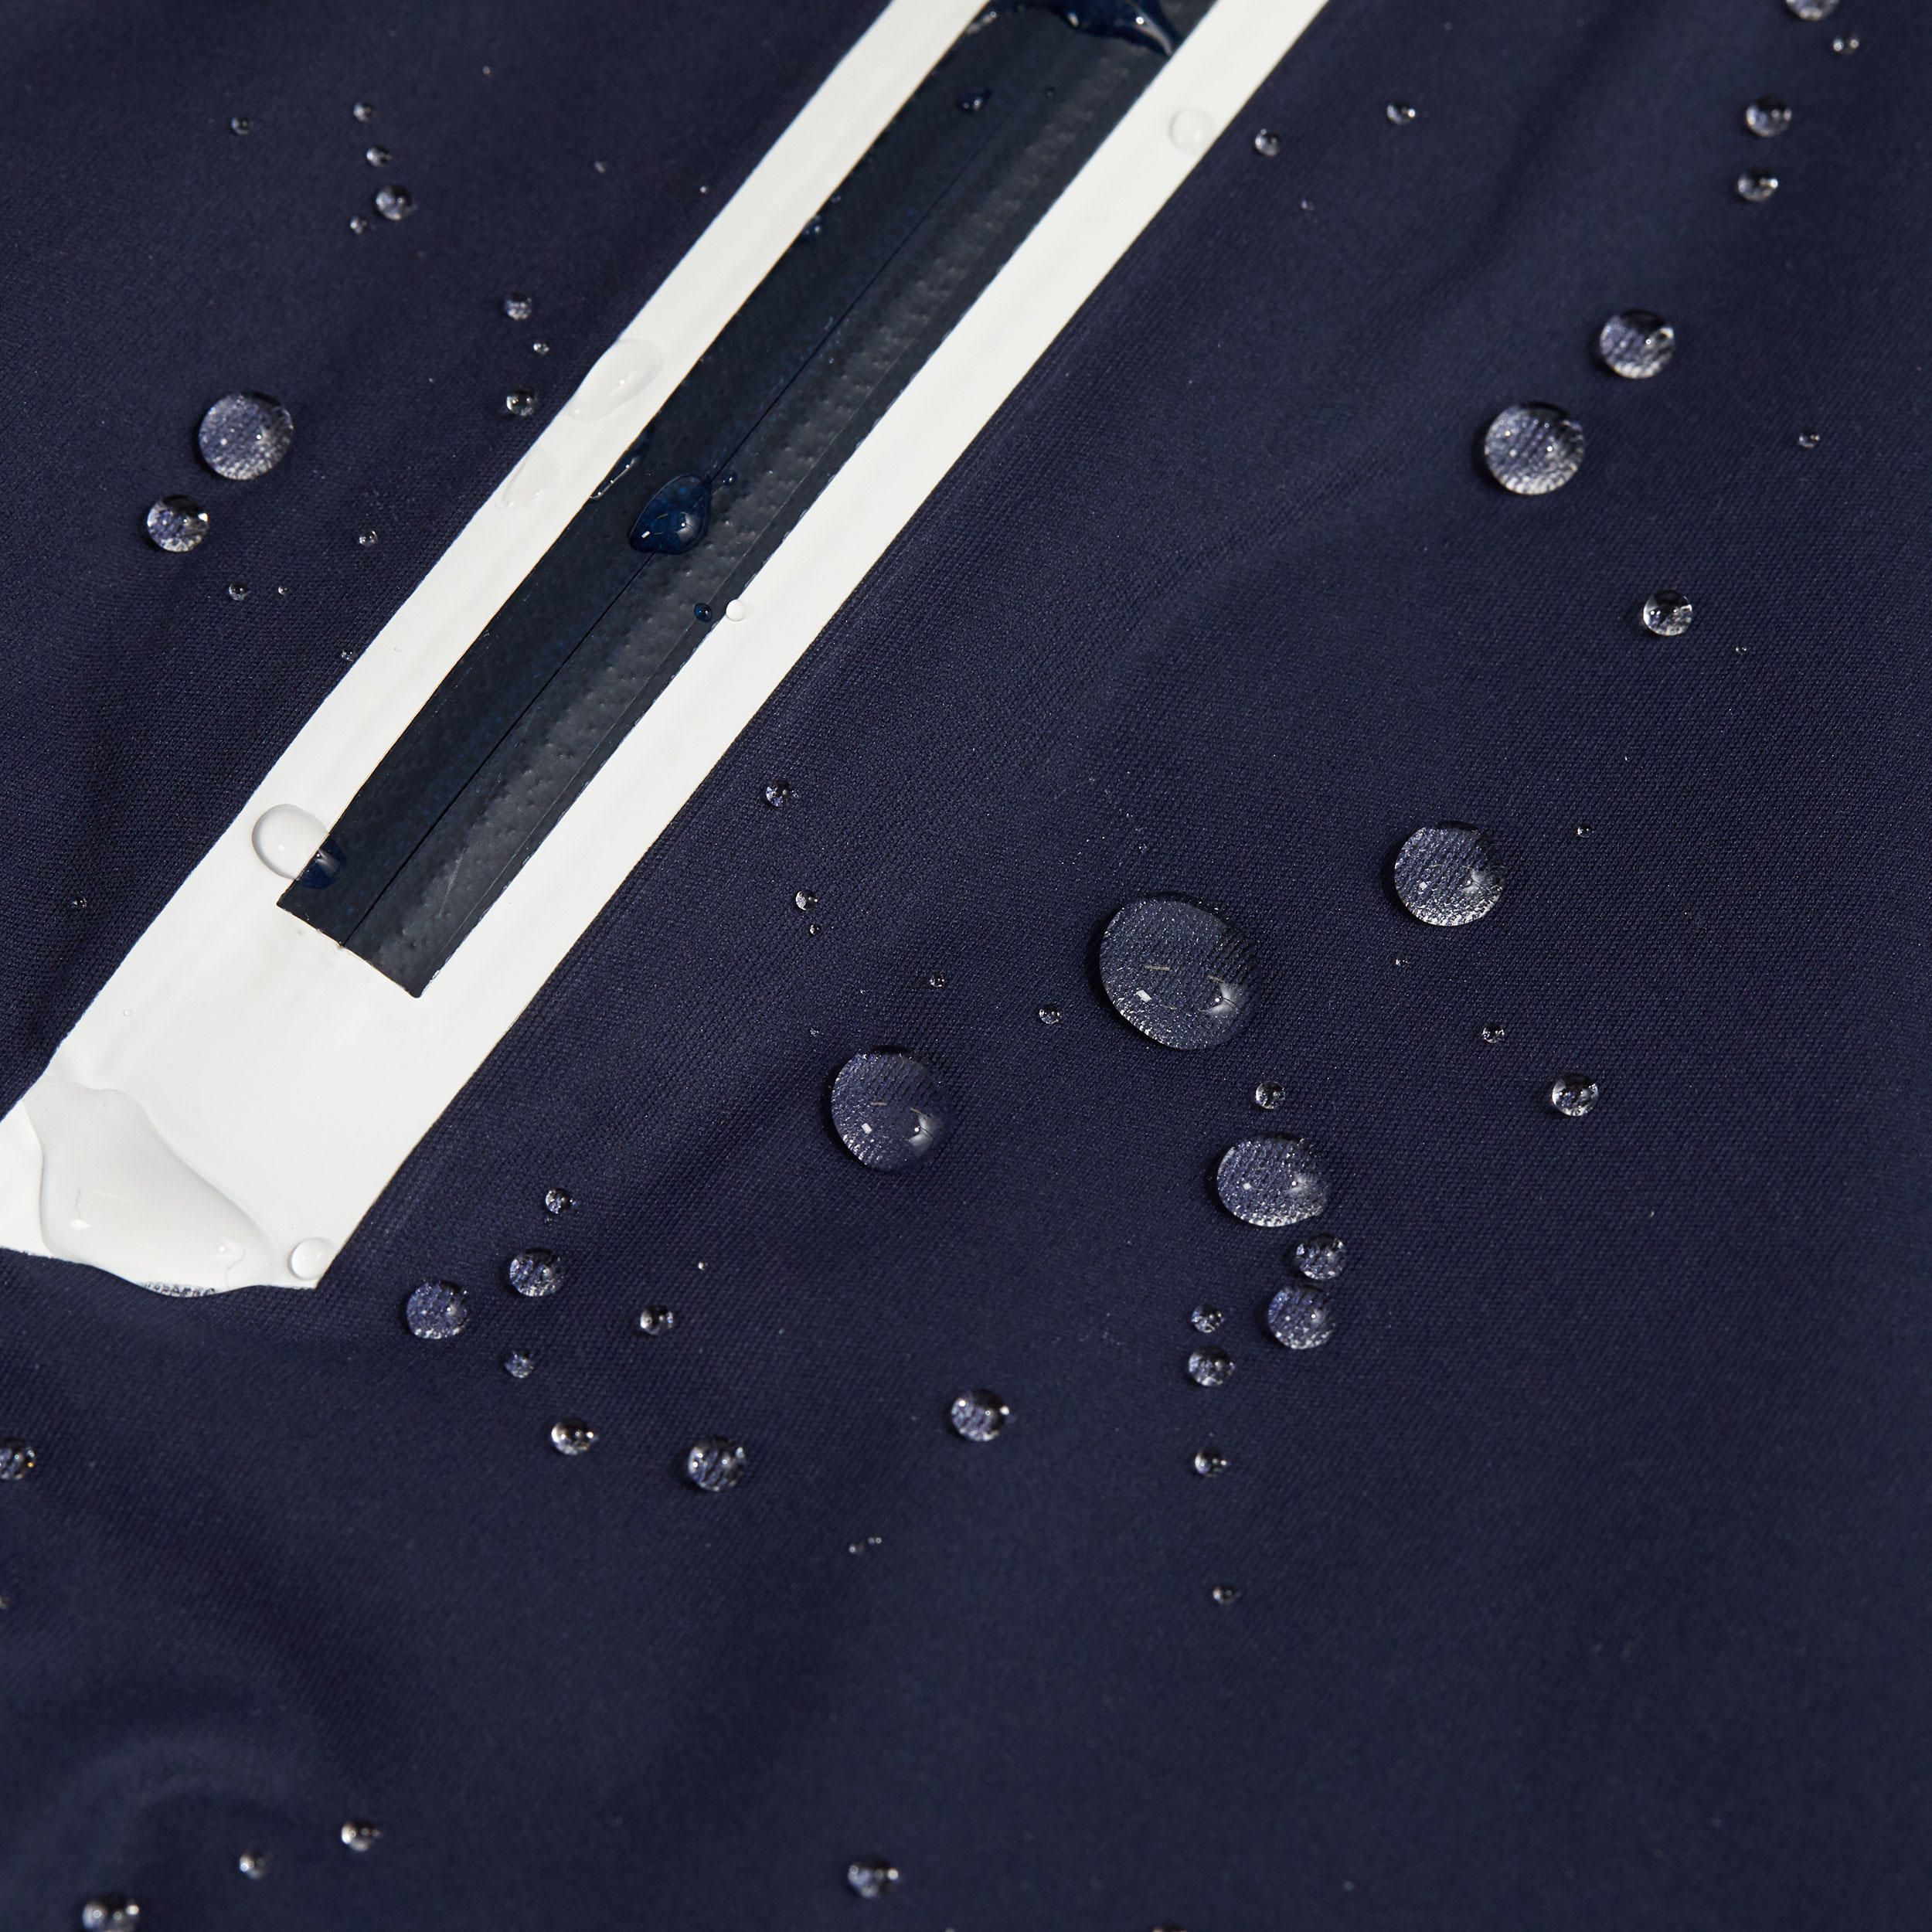 Men's golf waterproof rain trousers - RW500 navy blue 6/8